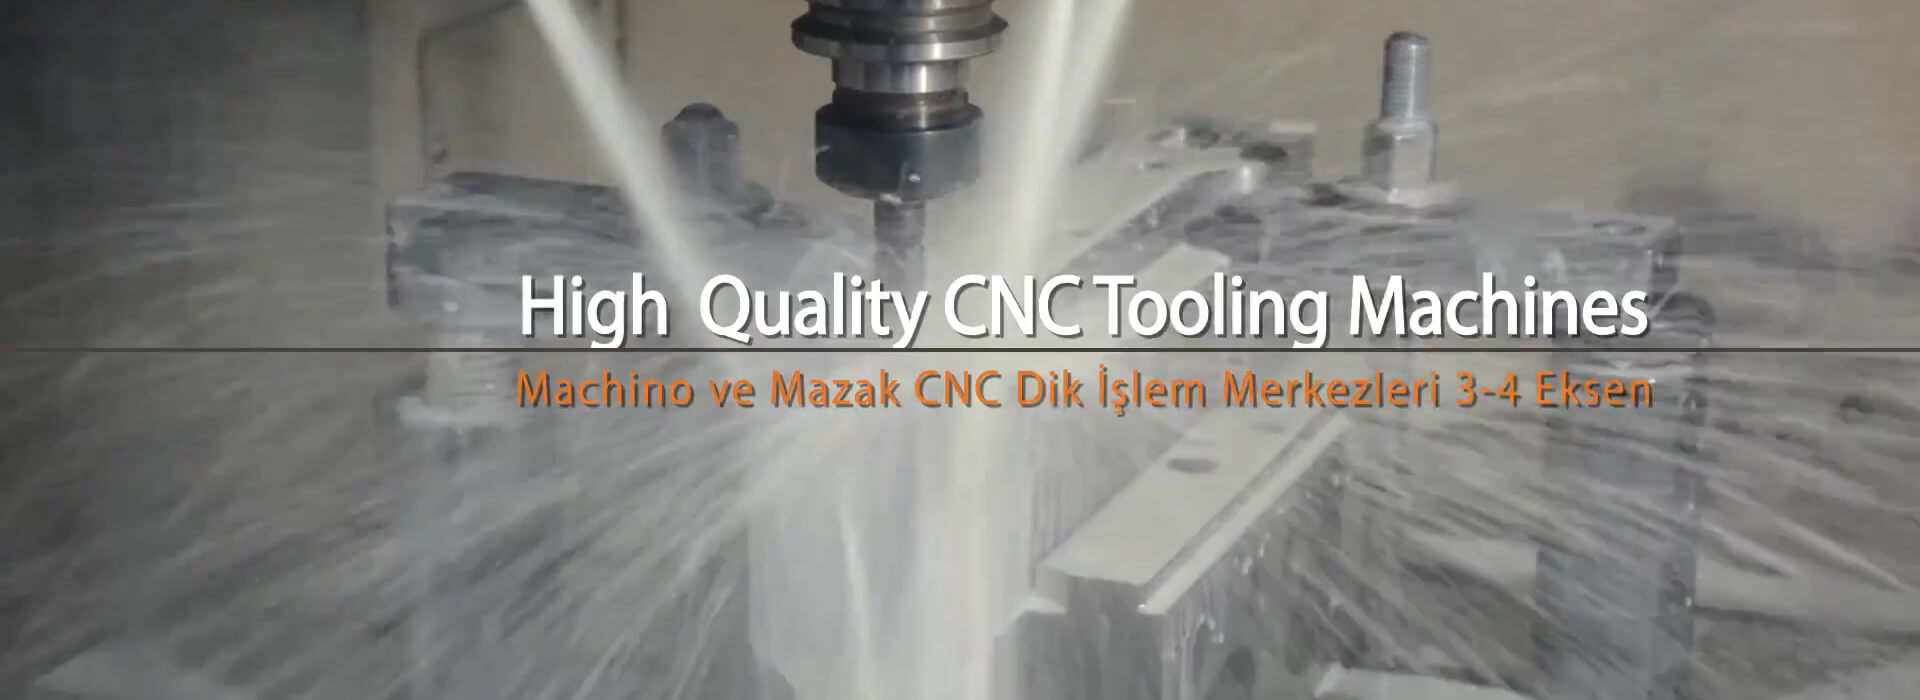 High Quality CNC Tooling Machines